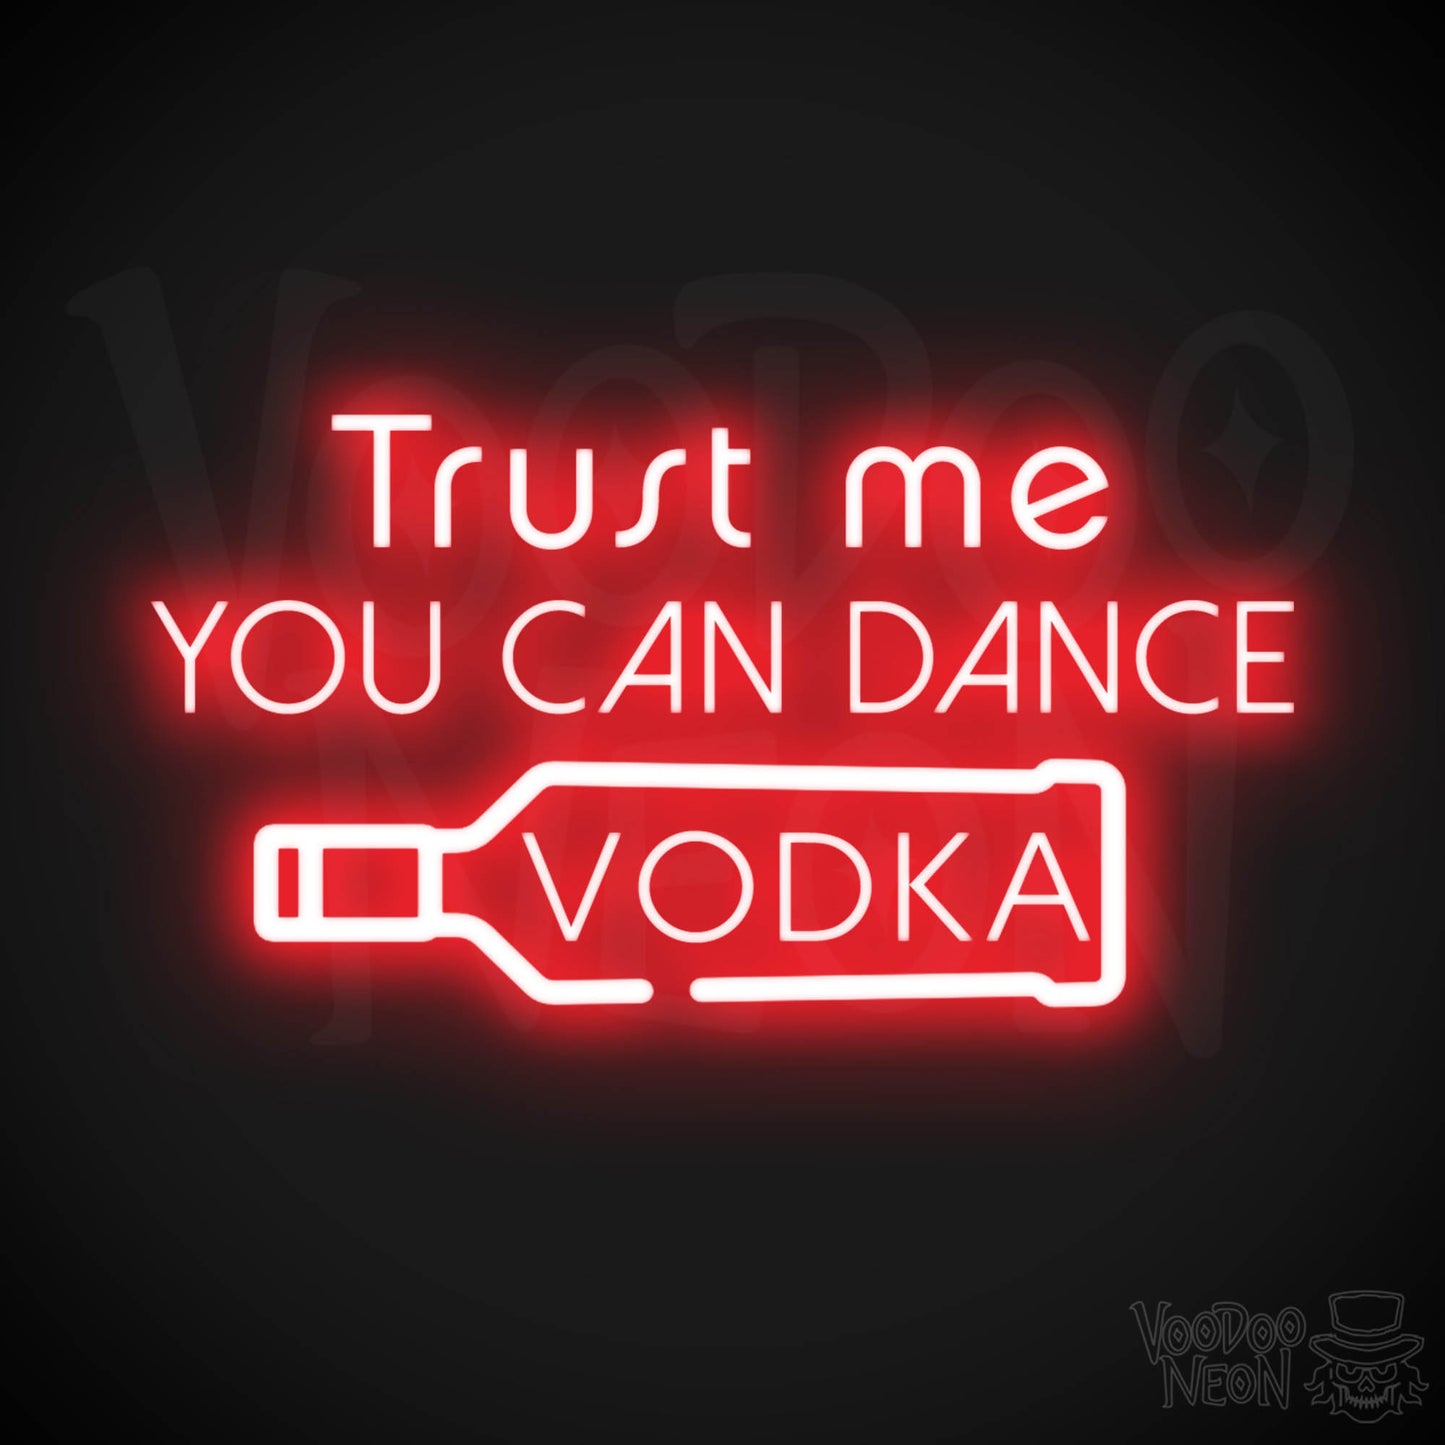 Trust Me You Can Dance Vodka Neon Sign - Vodka Bar Sign - LED Signs - Color Red